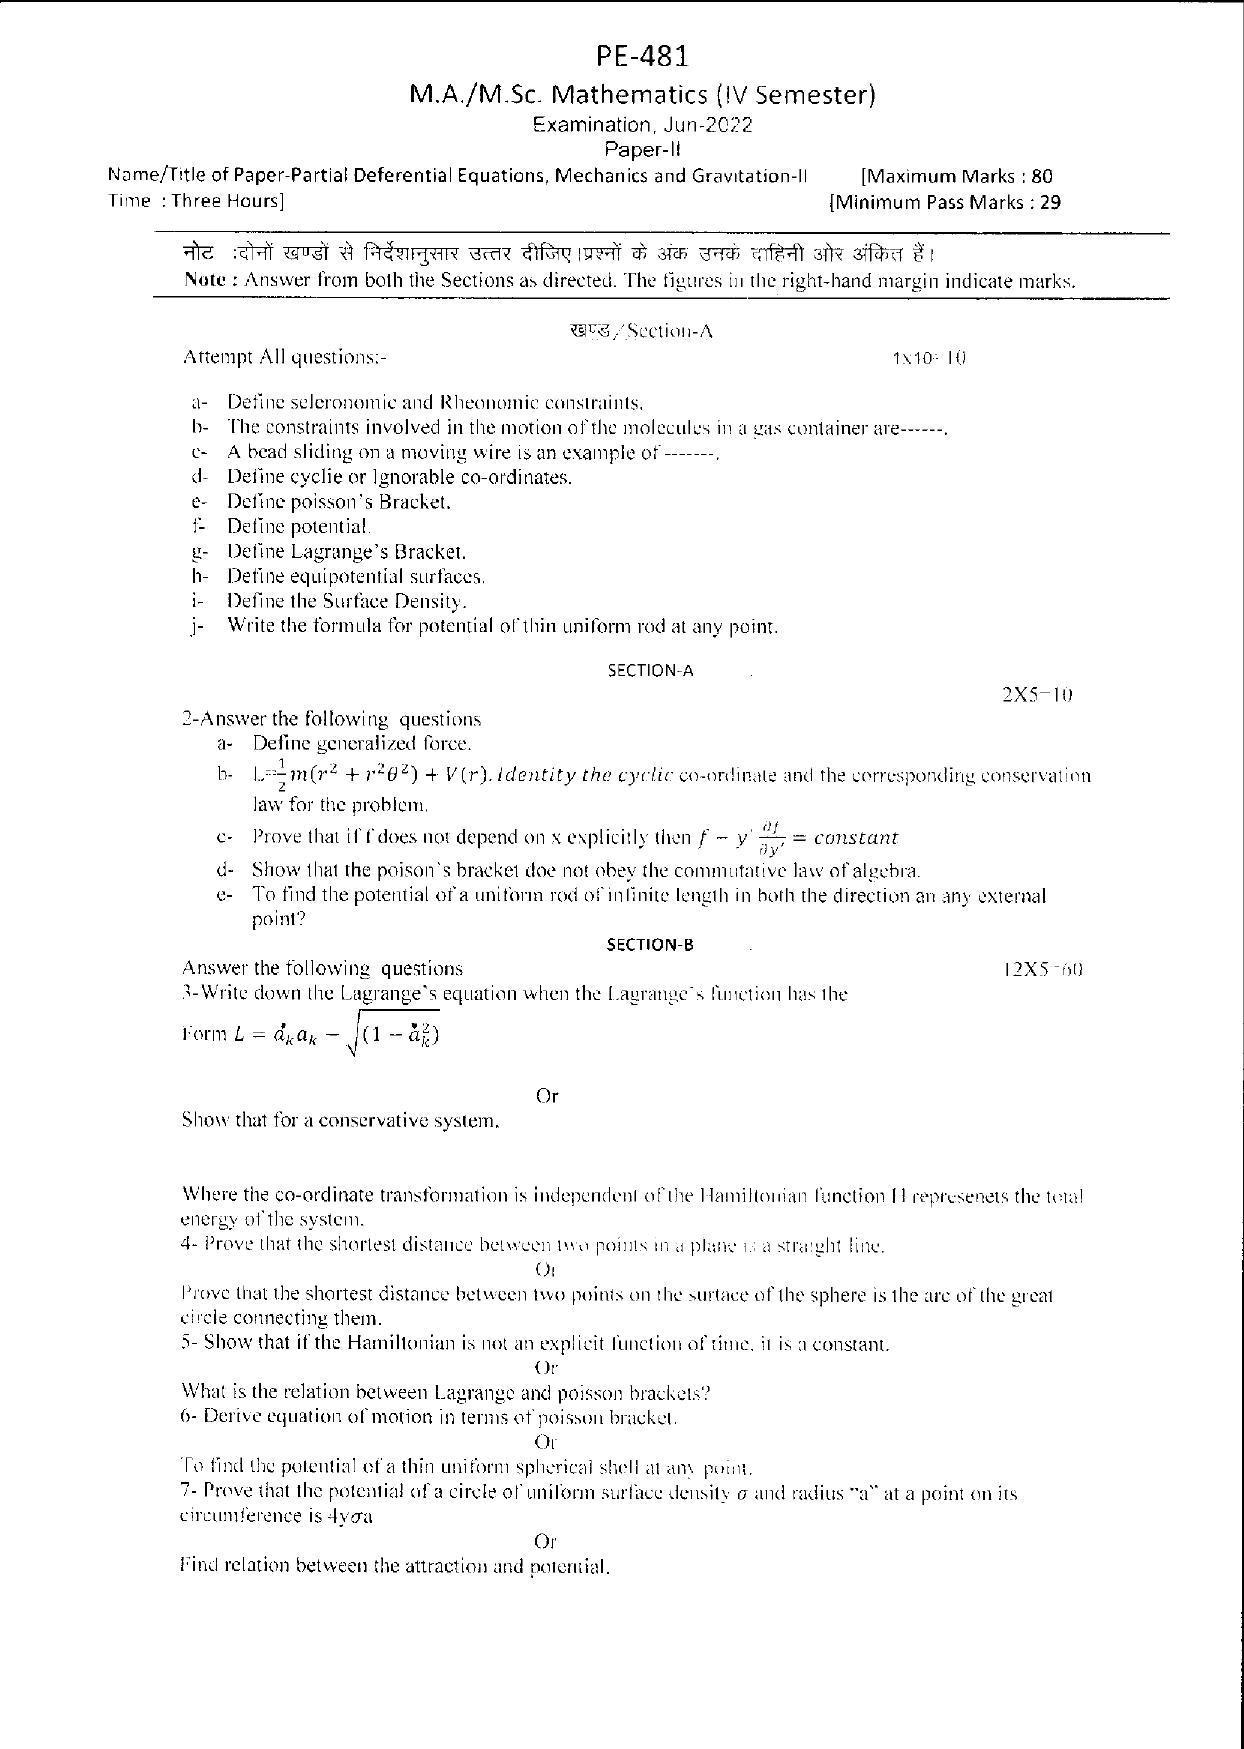 Bilaspur University Question Paper June 2022:M.A./M.Sc. Mathematics(Fourth Semester) partial Differential Equations,Mechanics And Gravitation -II Paper 1 - Page 1